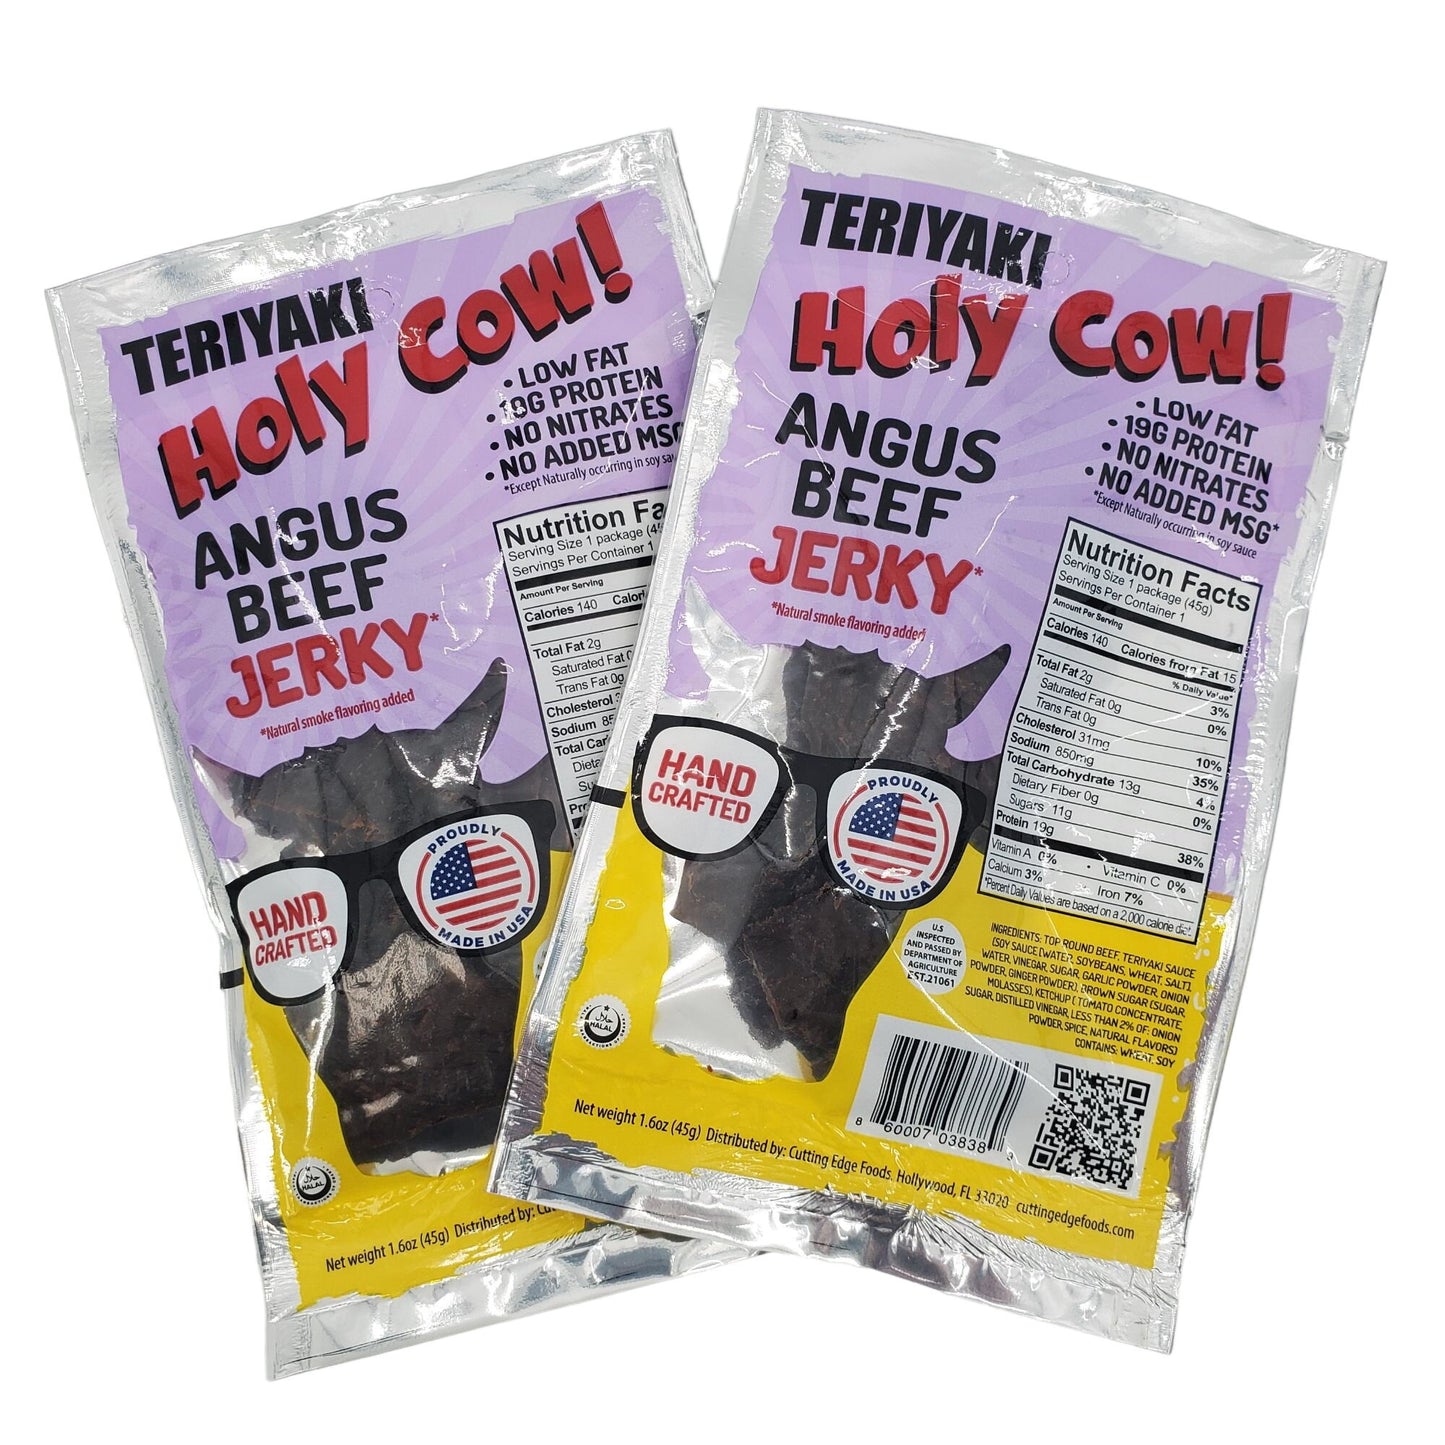 Holy Cow! Halal Premium Angus  Beef Jerky